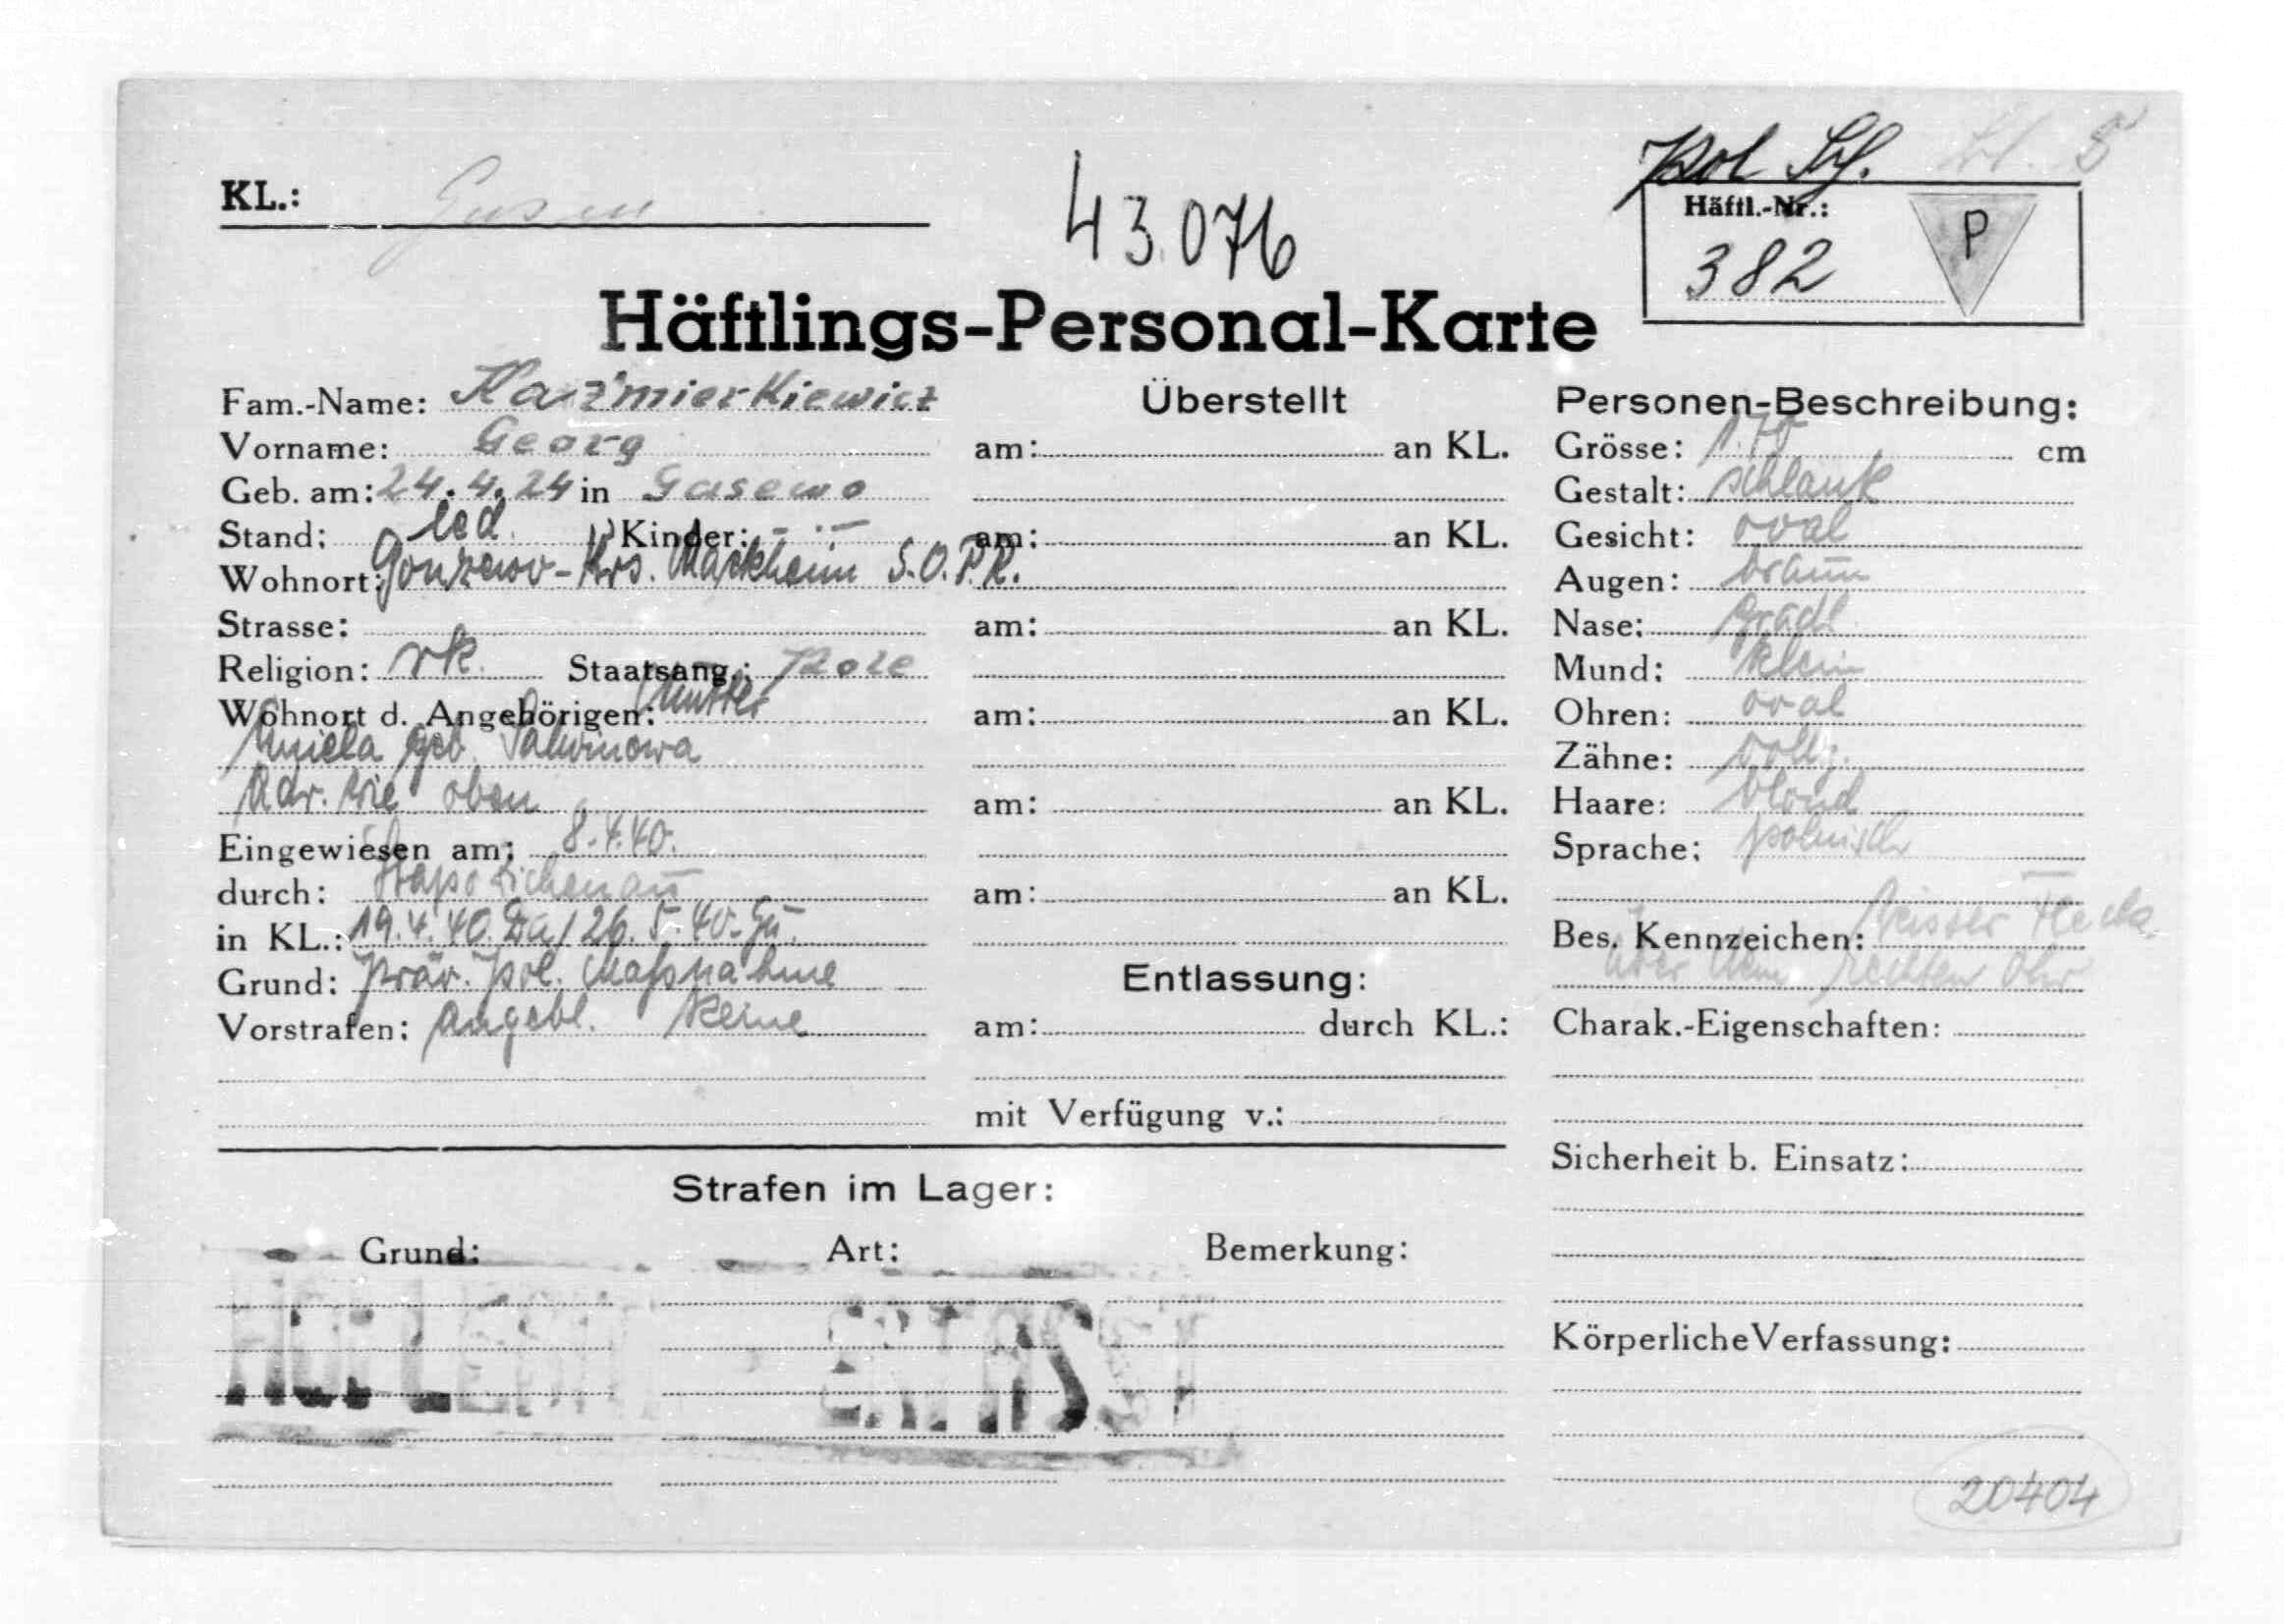 Camp file of Jerzy Kazmirkiewicz, Polish political prisoner number 382 at Mauthausen-Gusen Concentration Camp, Austria